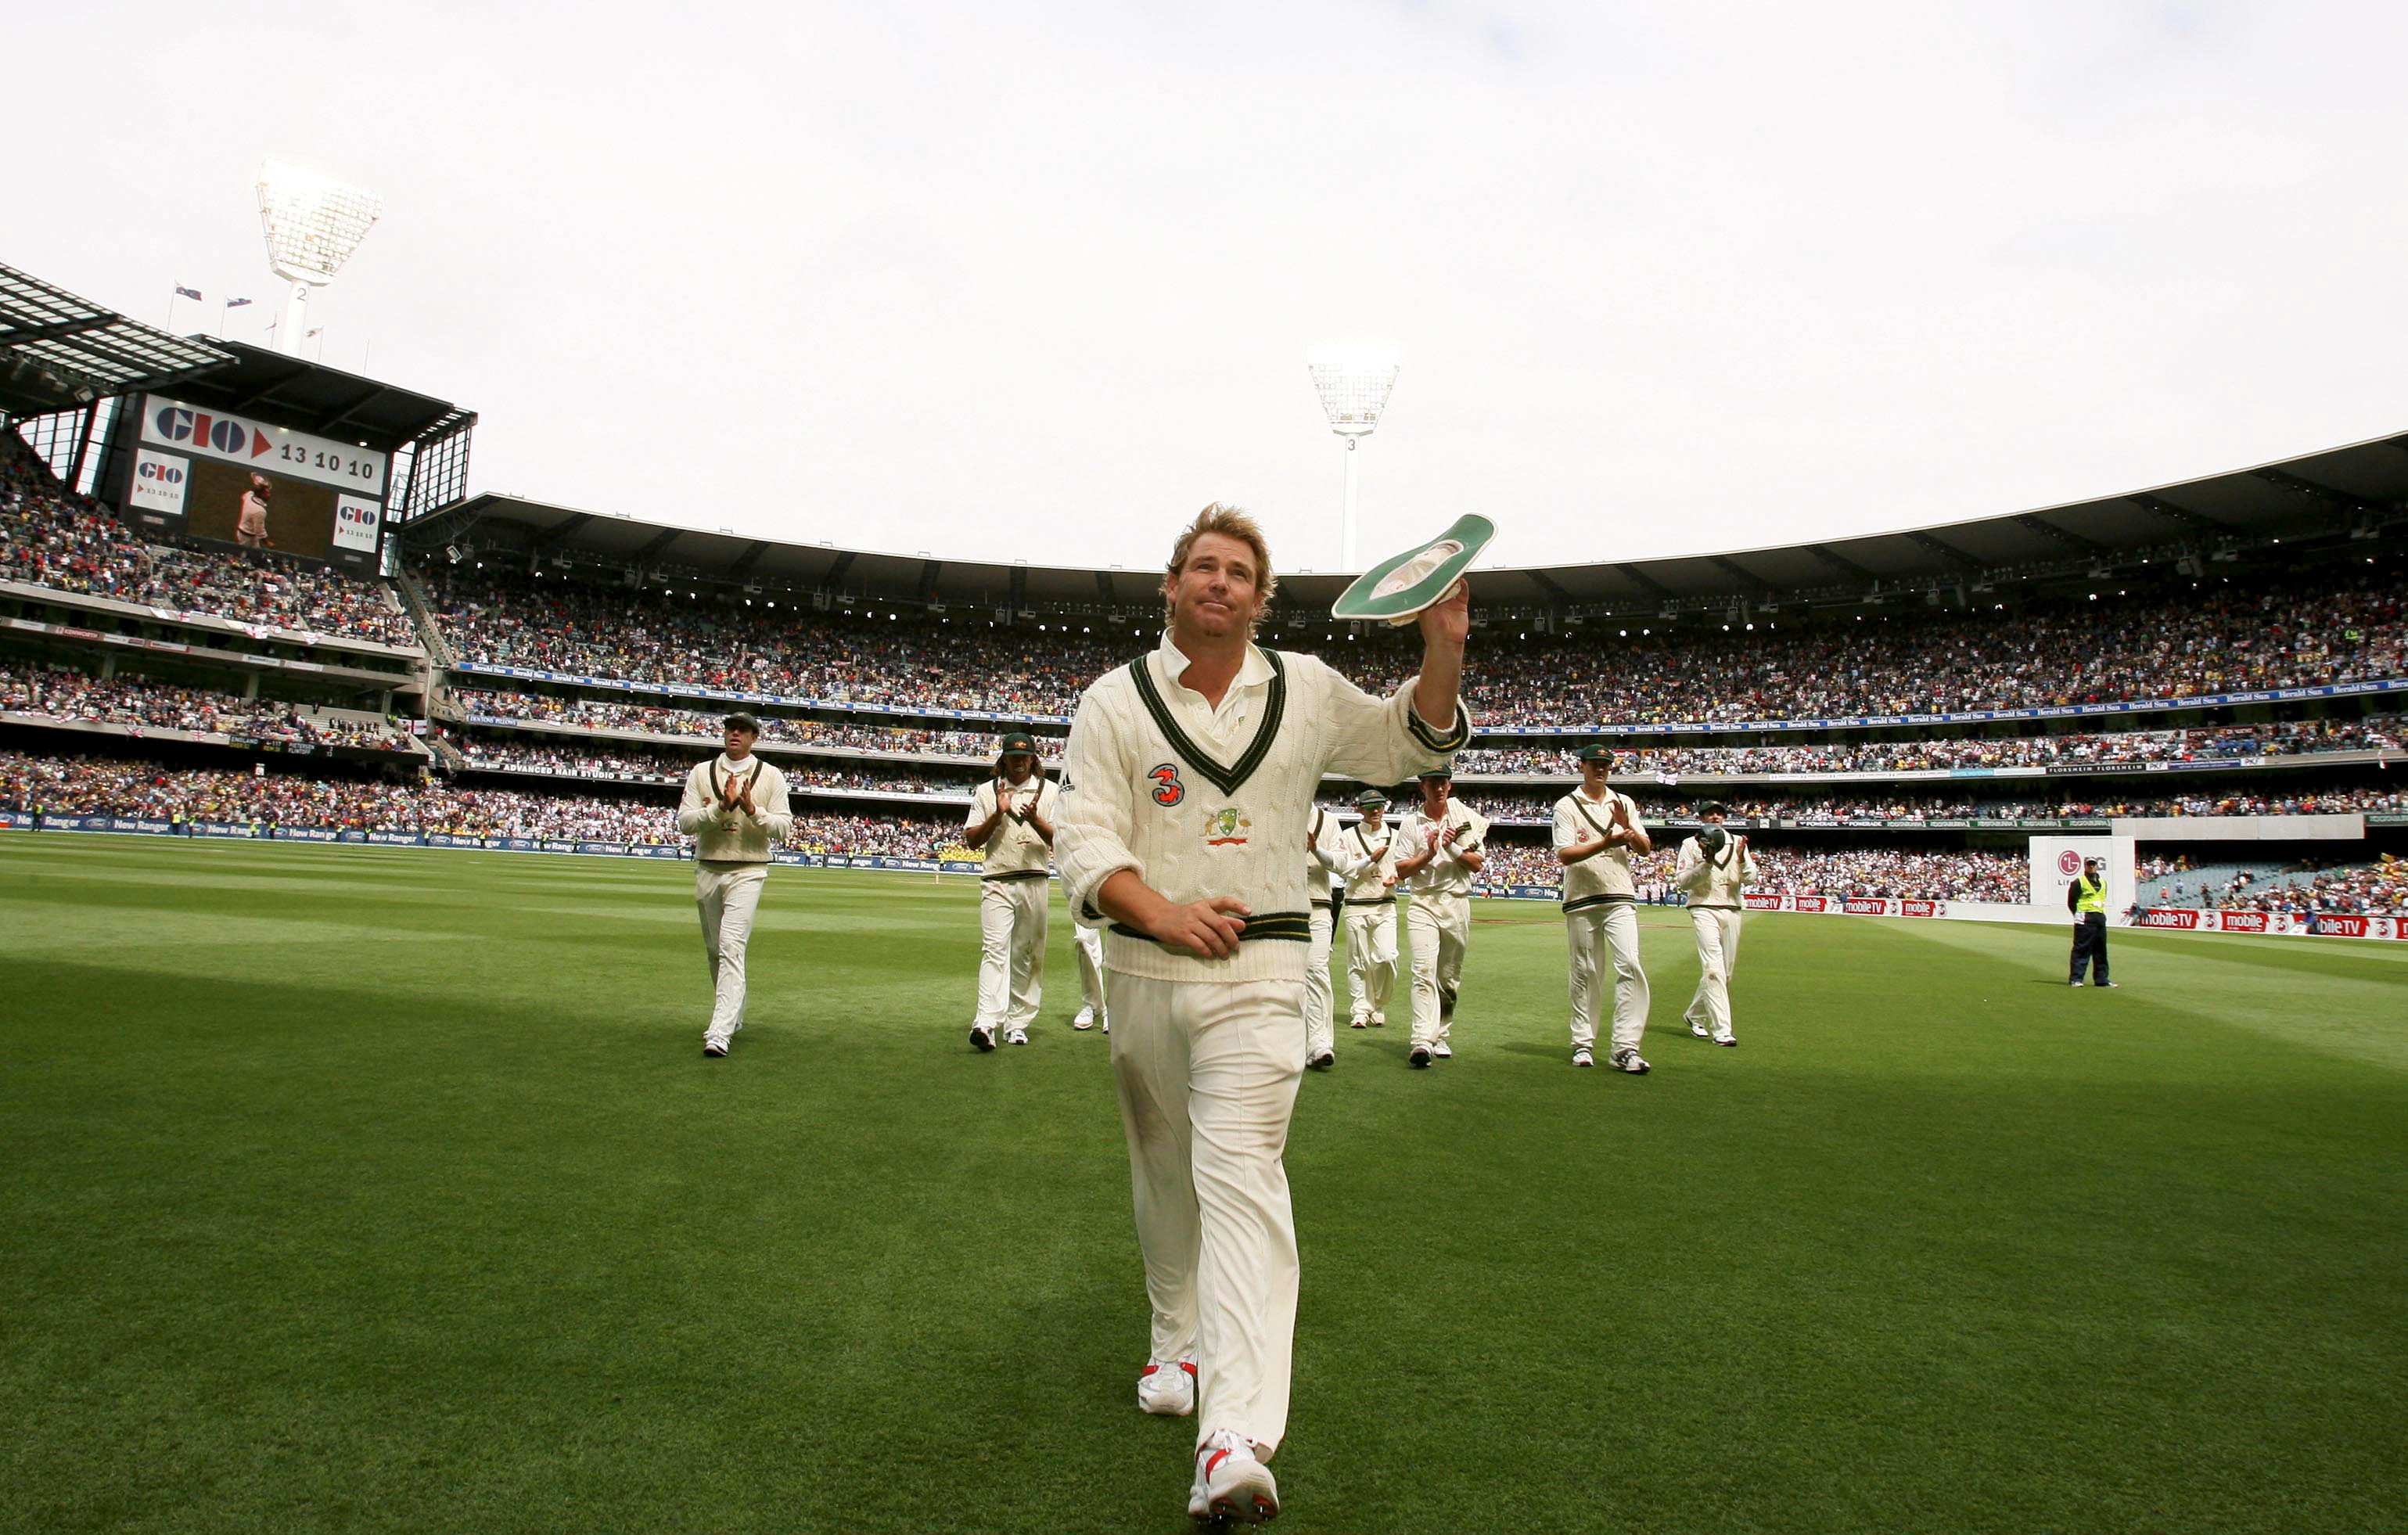 PFILE PHOTO: Australia v England Fourth Test - 3 Mobile Ashes Test Series 2006-07